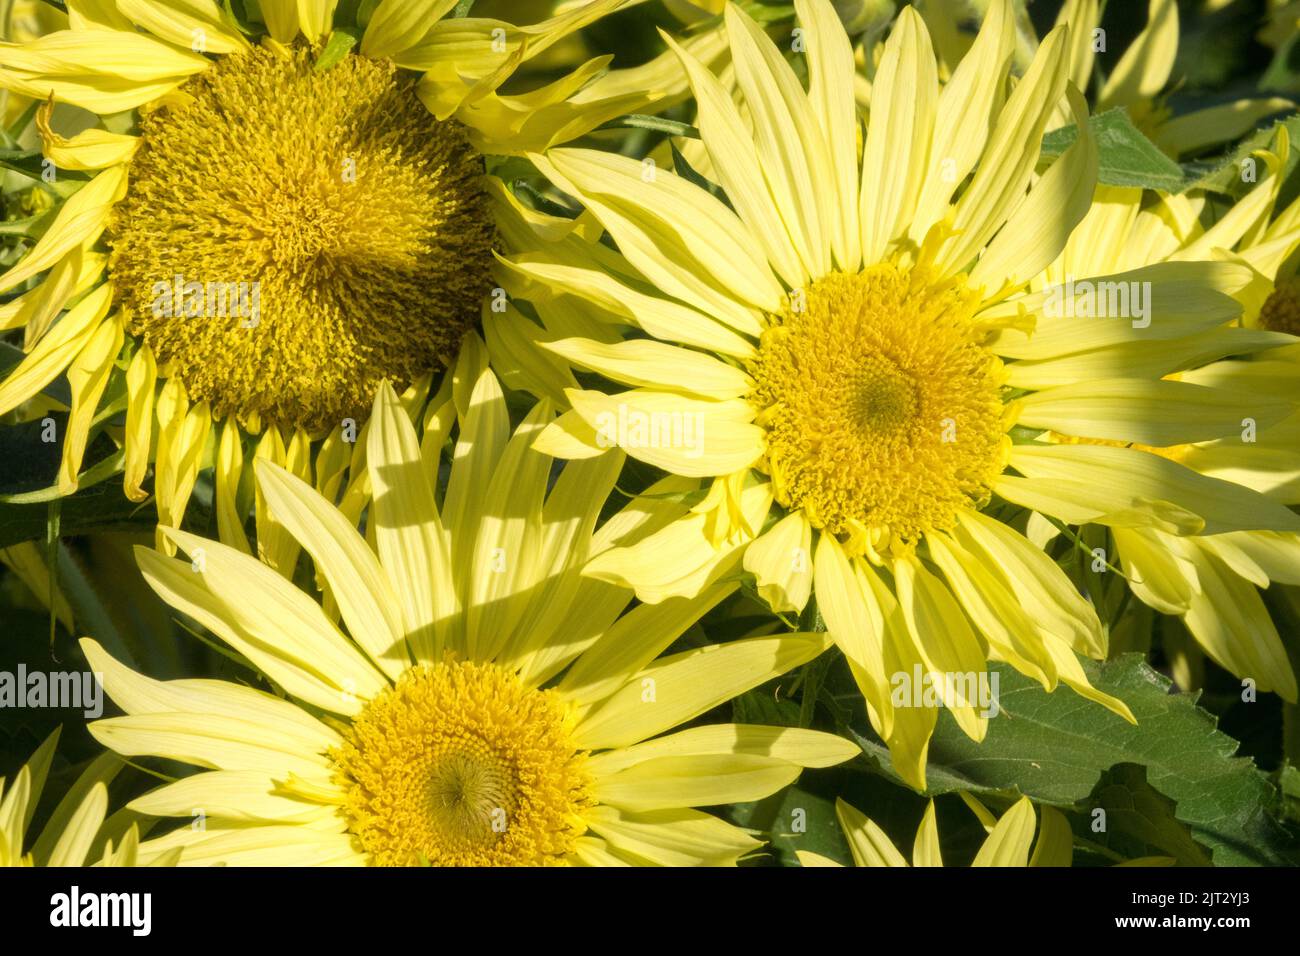 Yellow Sunflowers, Helianthus annuus 'Lemon Cutie' Stock Photo